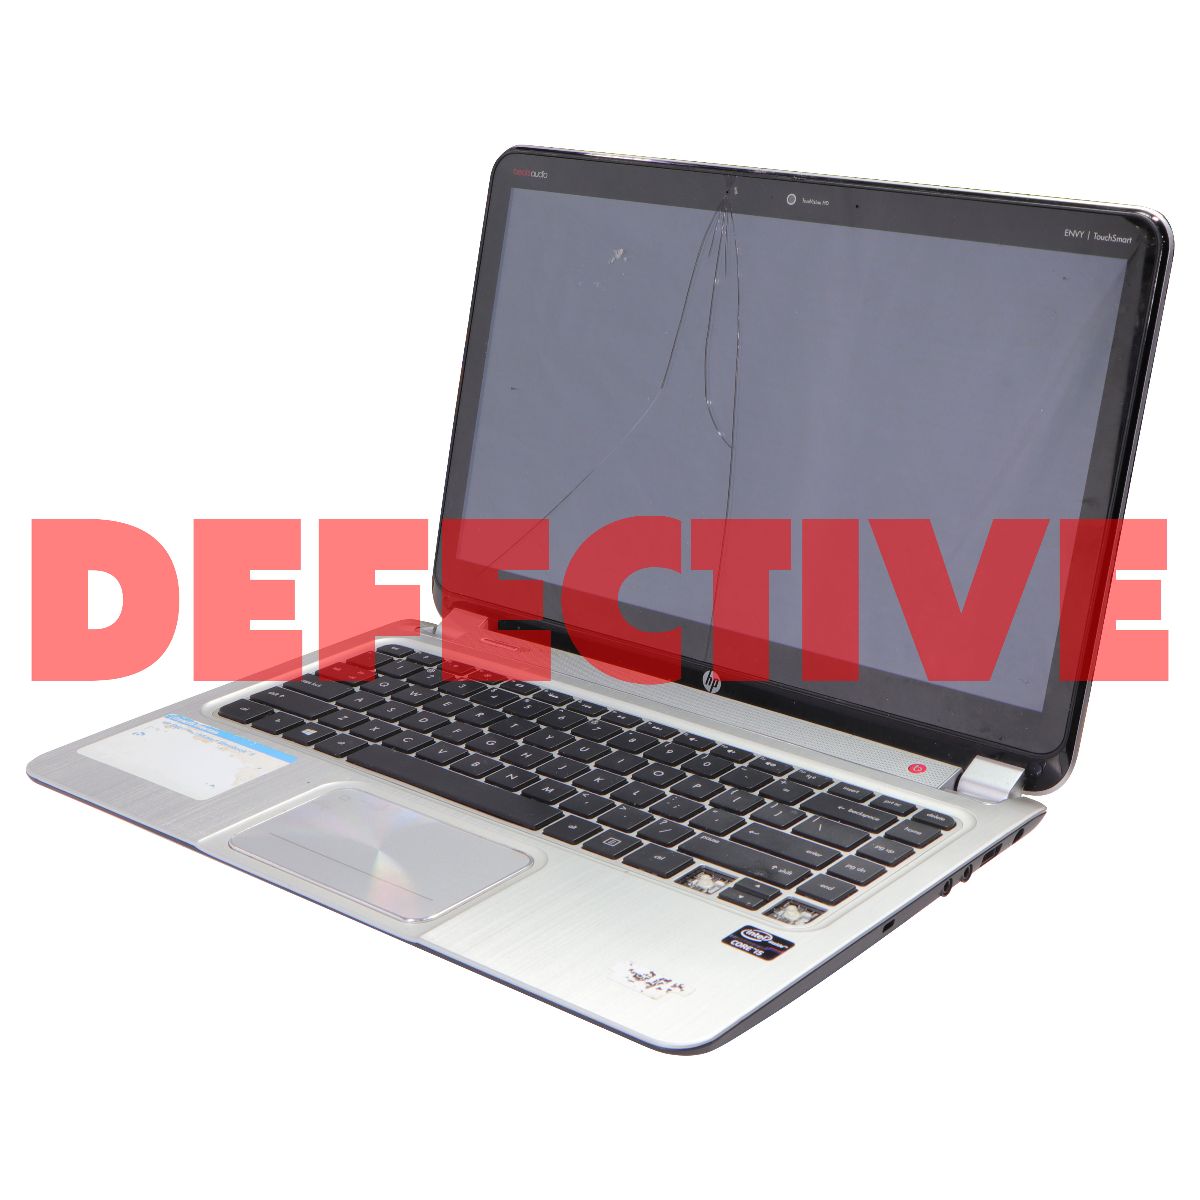 HP Envy TouchSmart UltraBook (4-1115dx) i5-3317U/500GB HDD/4 GB RAM/8 Home/Black Laptops - PC Laptops & Netbooks HP    - Simple Cell Bulk Wholesale Pricing - USA Seller